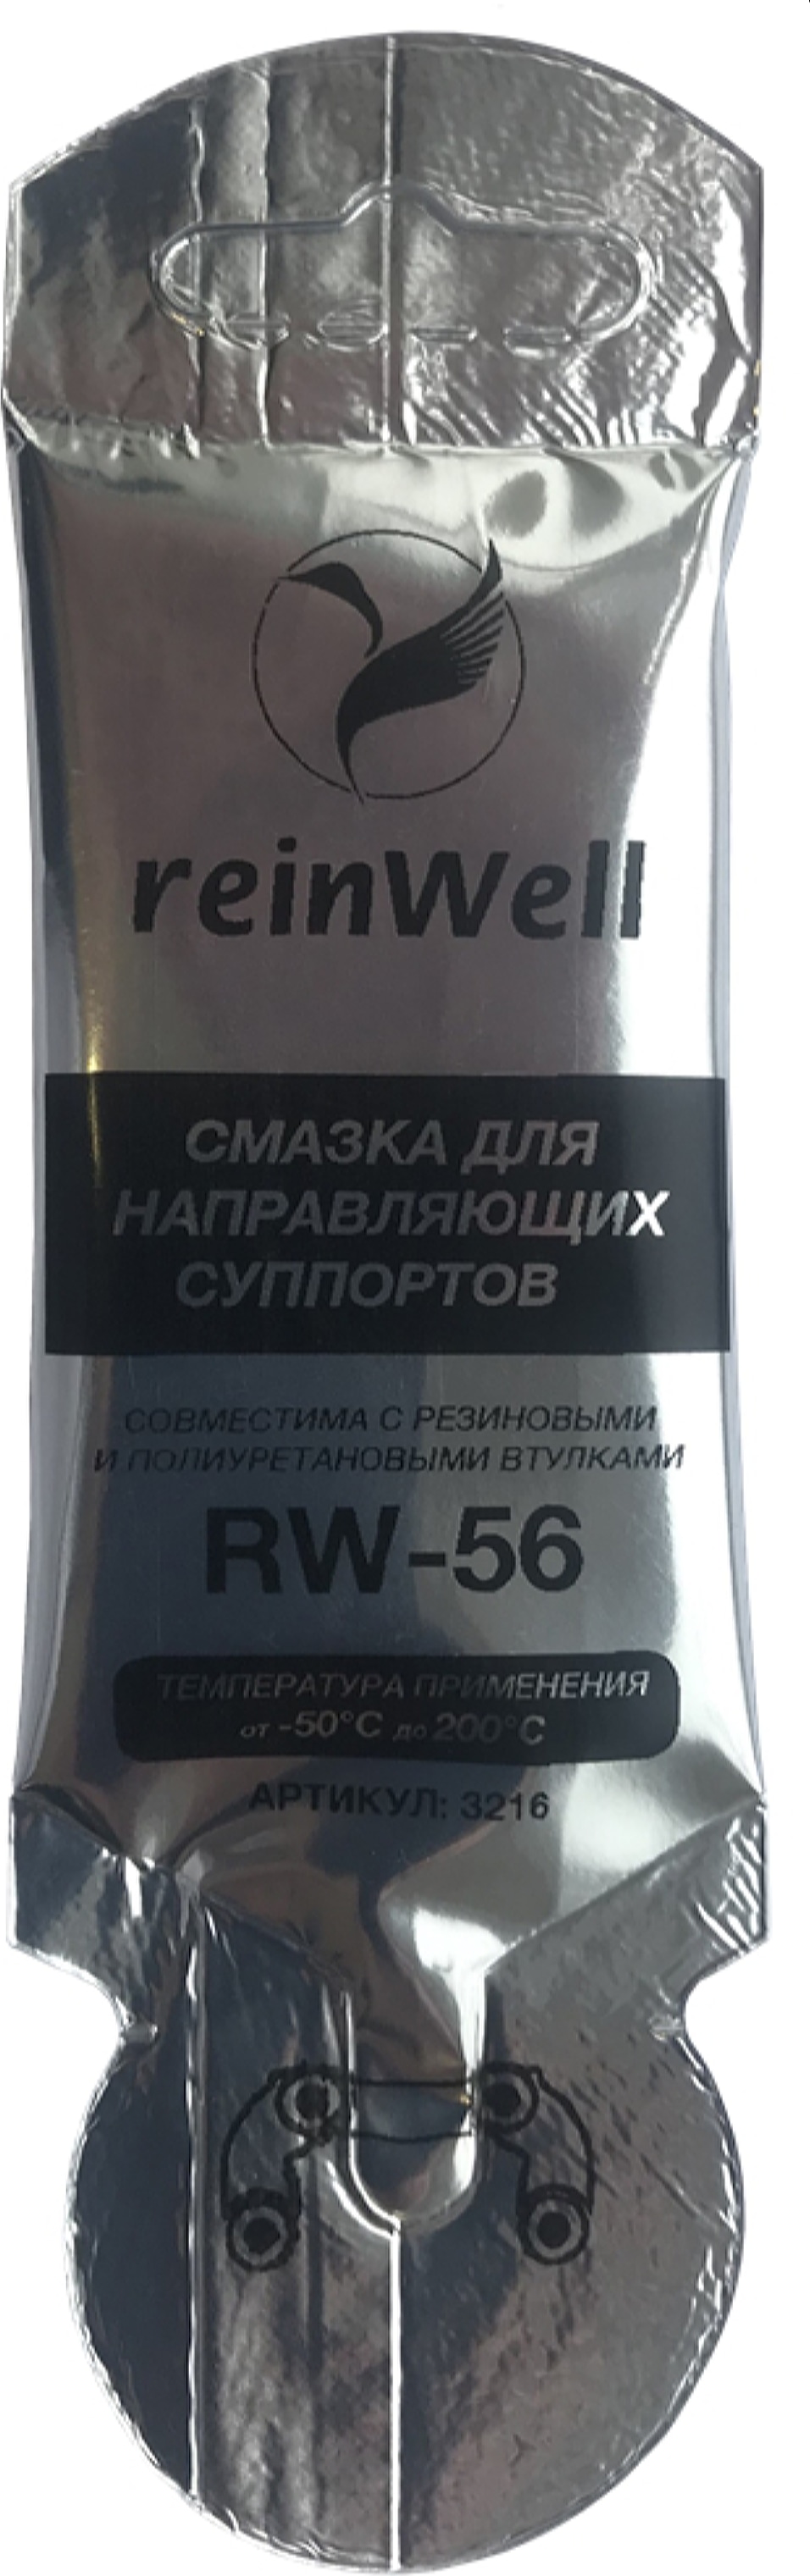 REINWELL 3216 Смазка reinwell 0.005л. купить в Самаре